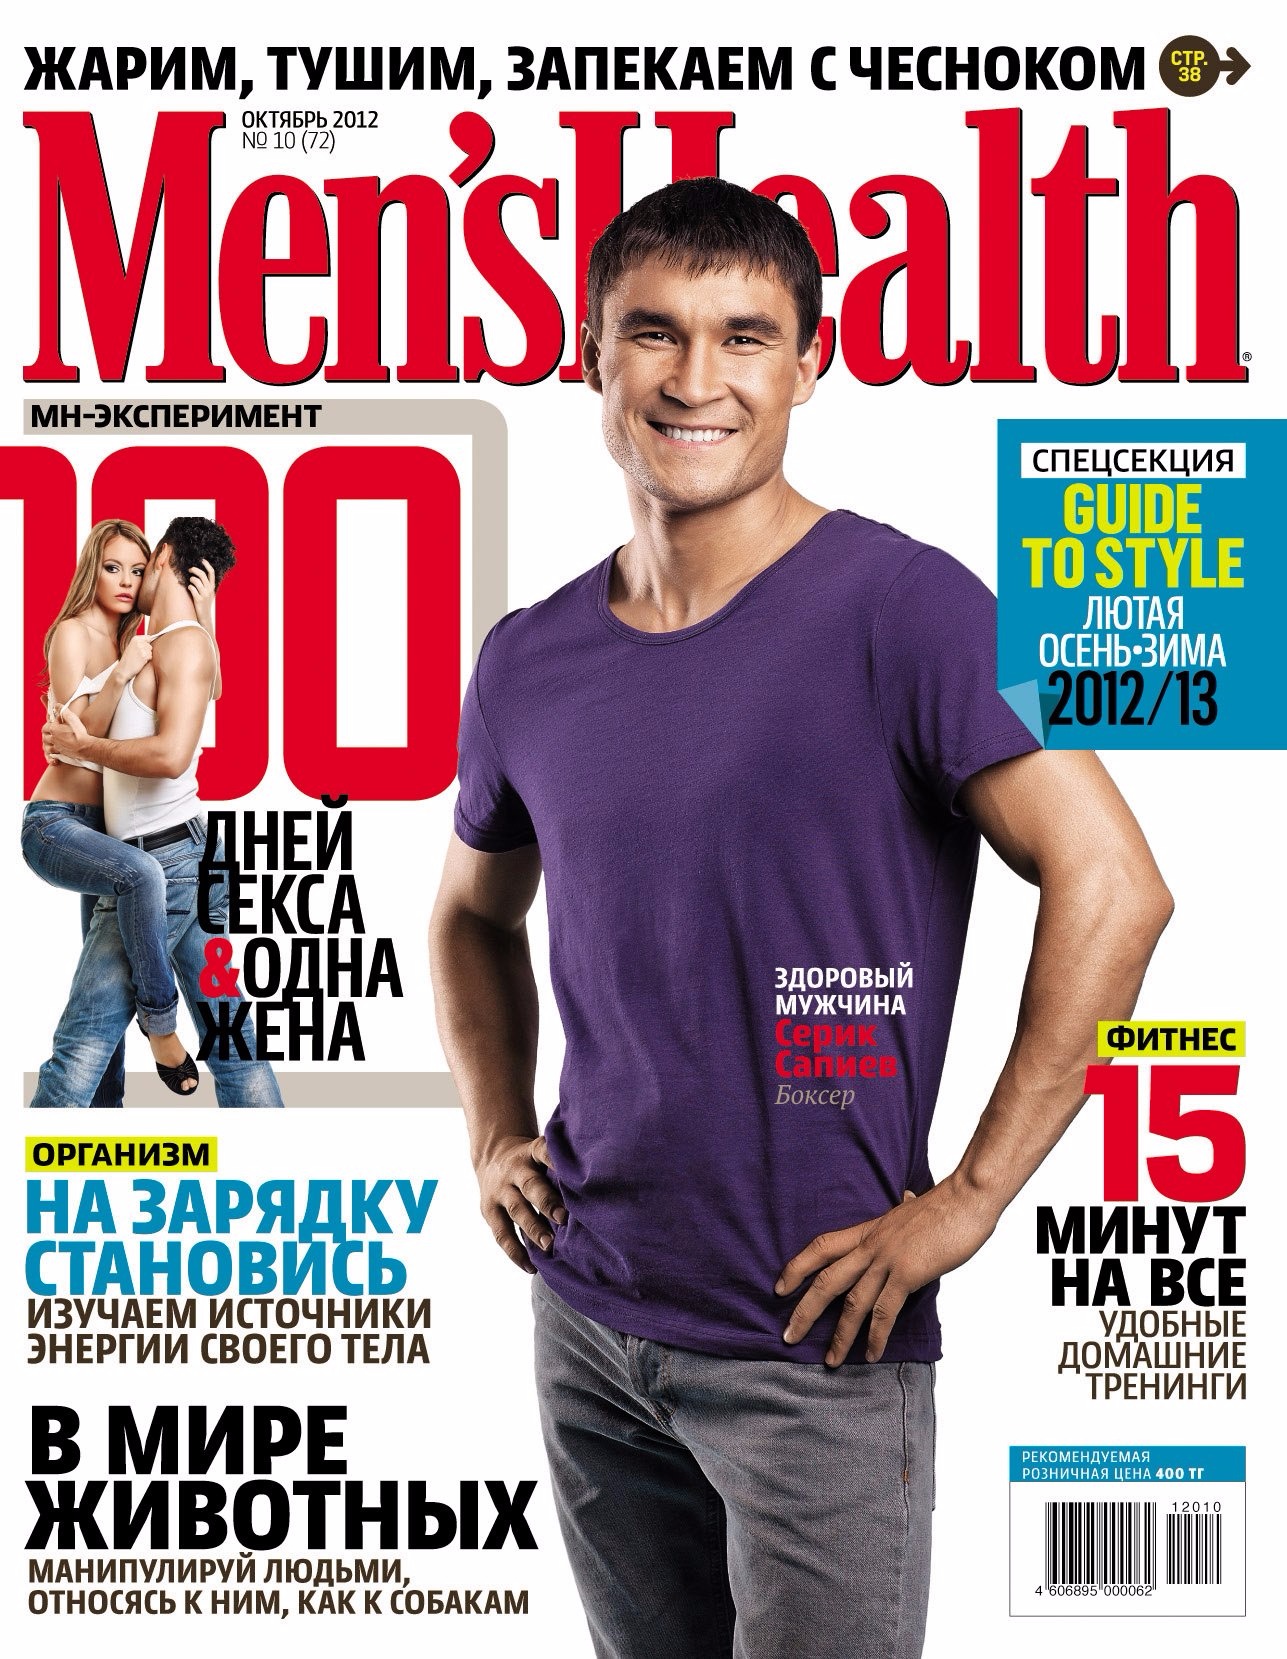 Men magazine. Обложка мужского журнала. Обложка Менс Хелс. Обложки журналов с мужчинами. Журнал men's Health.